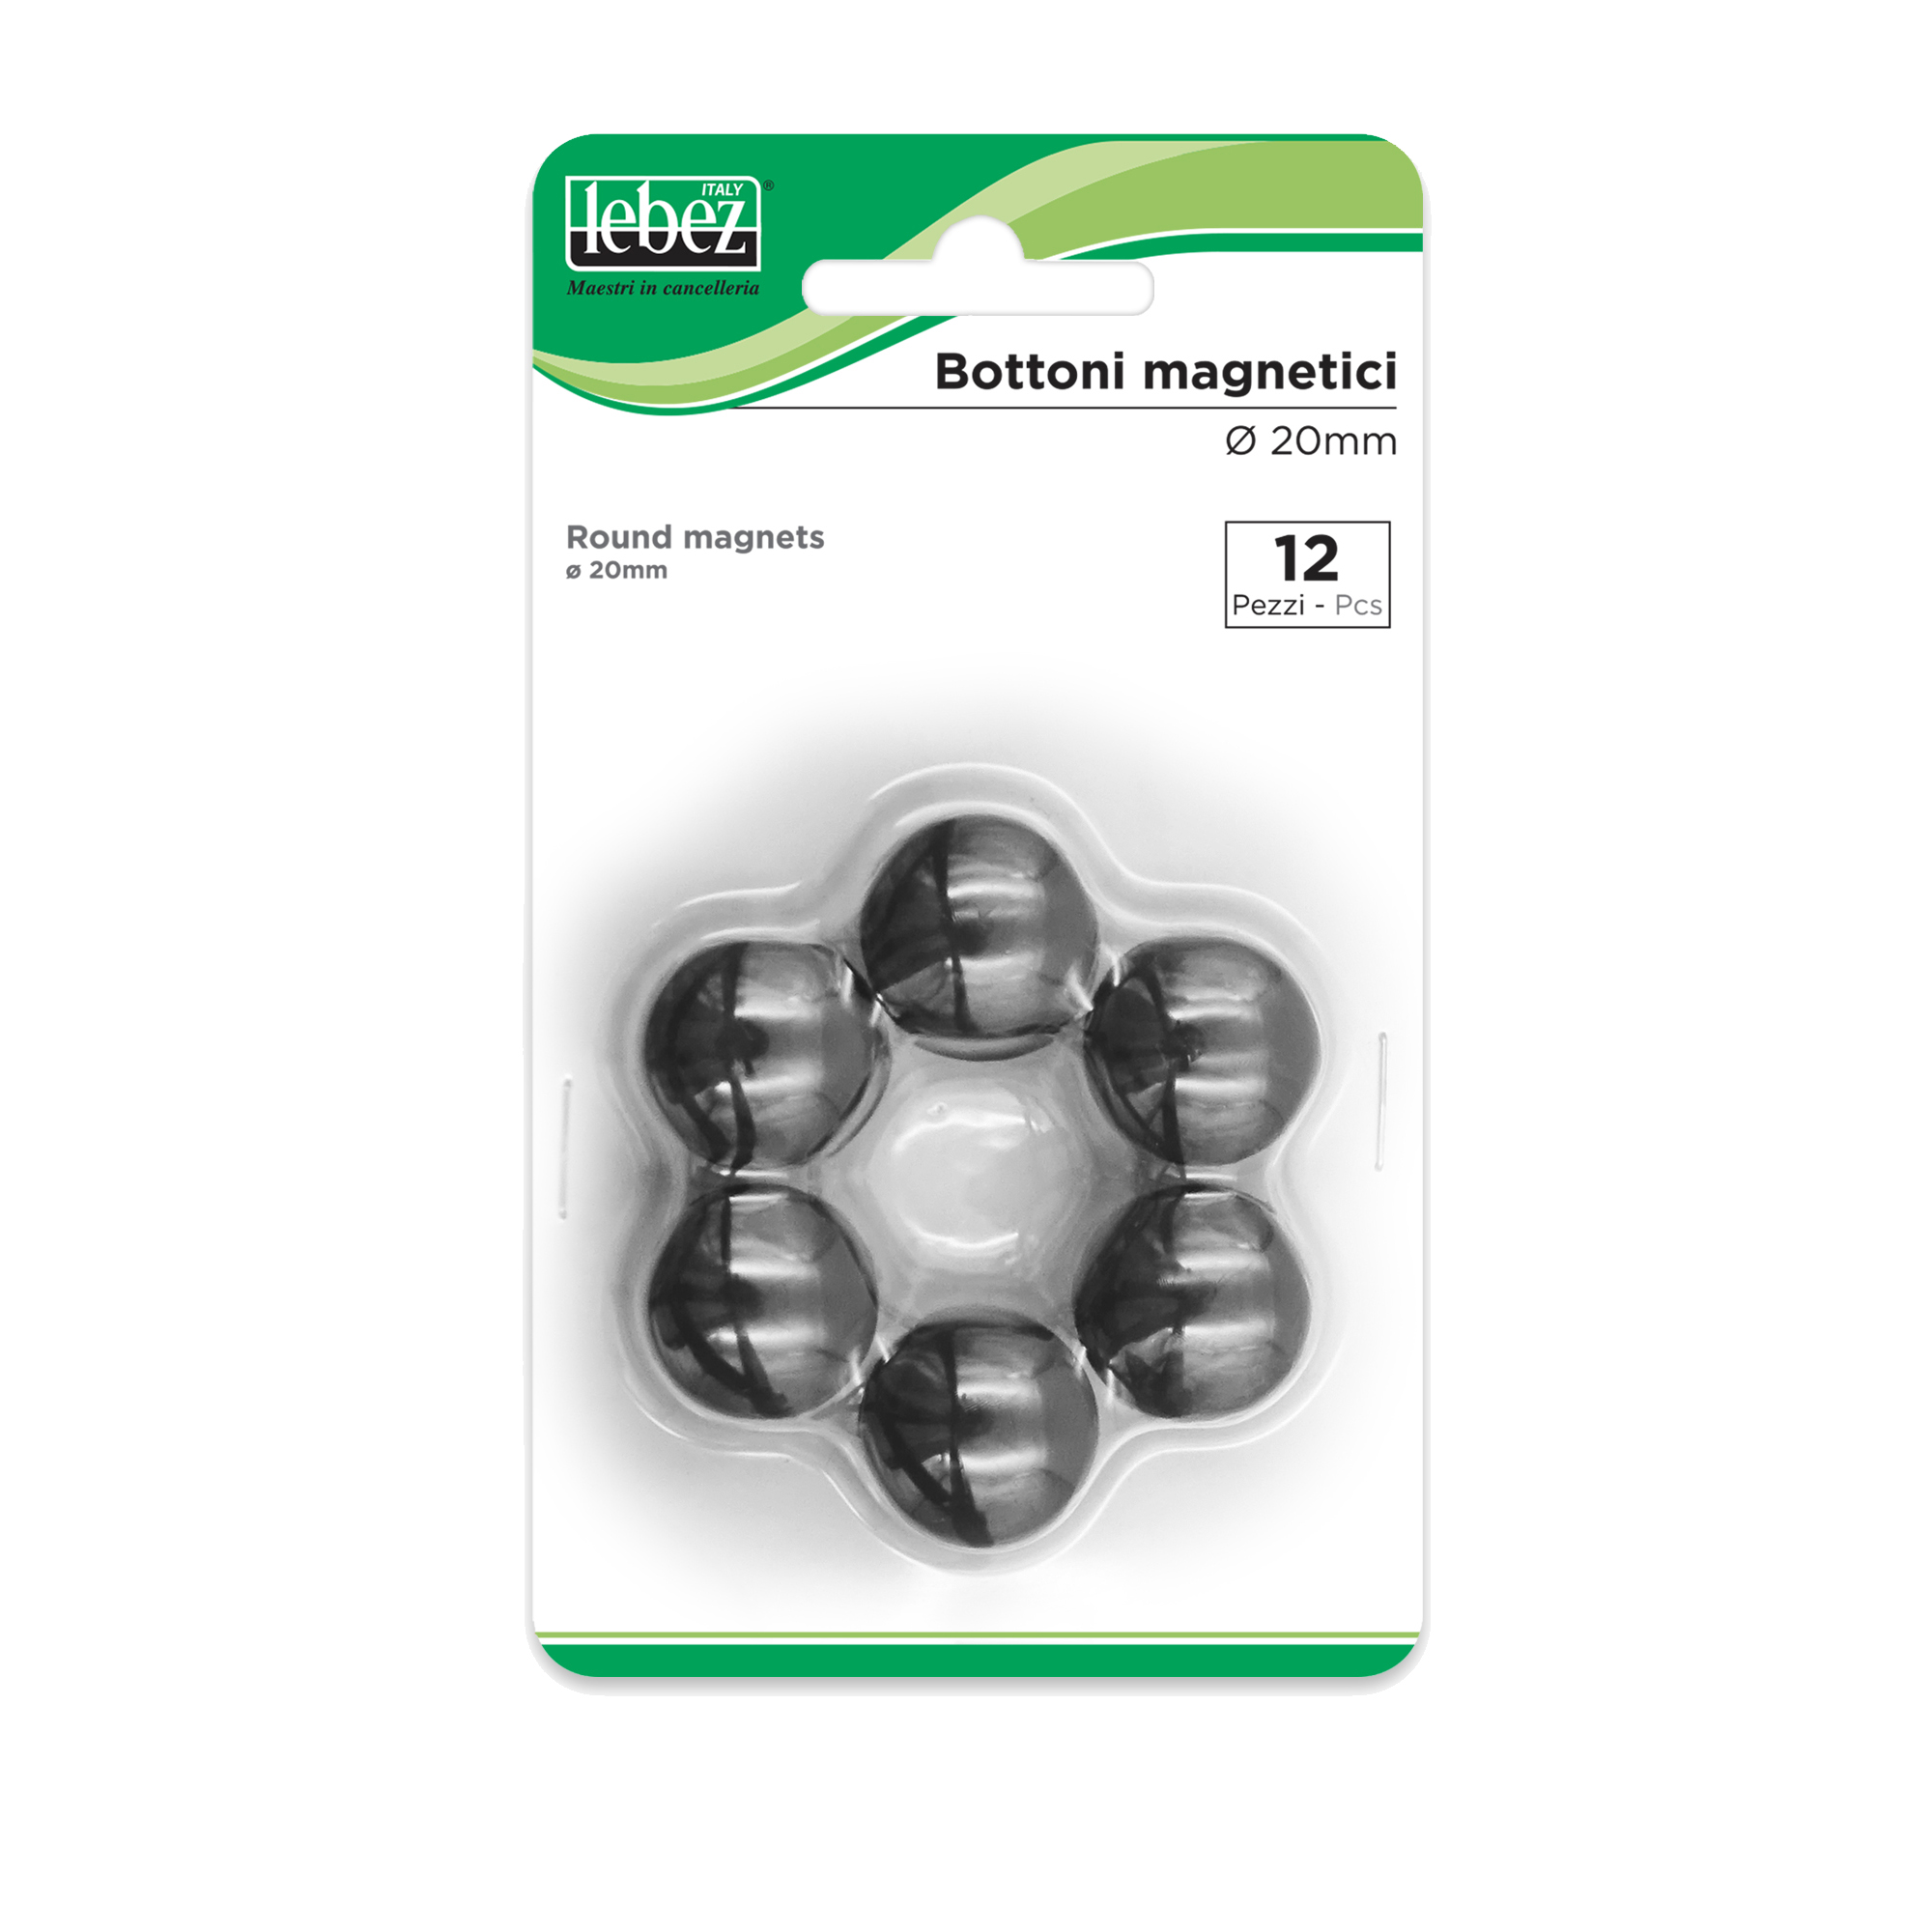 Bottoni magnetici - nero - diametro 20 mm - Lebez - blister 12 pezzi